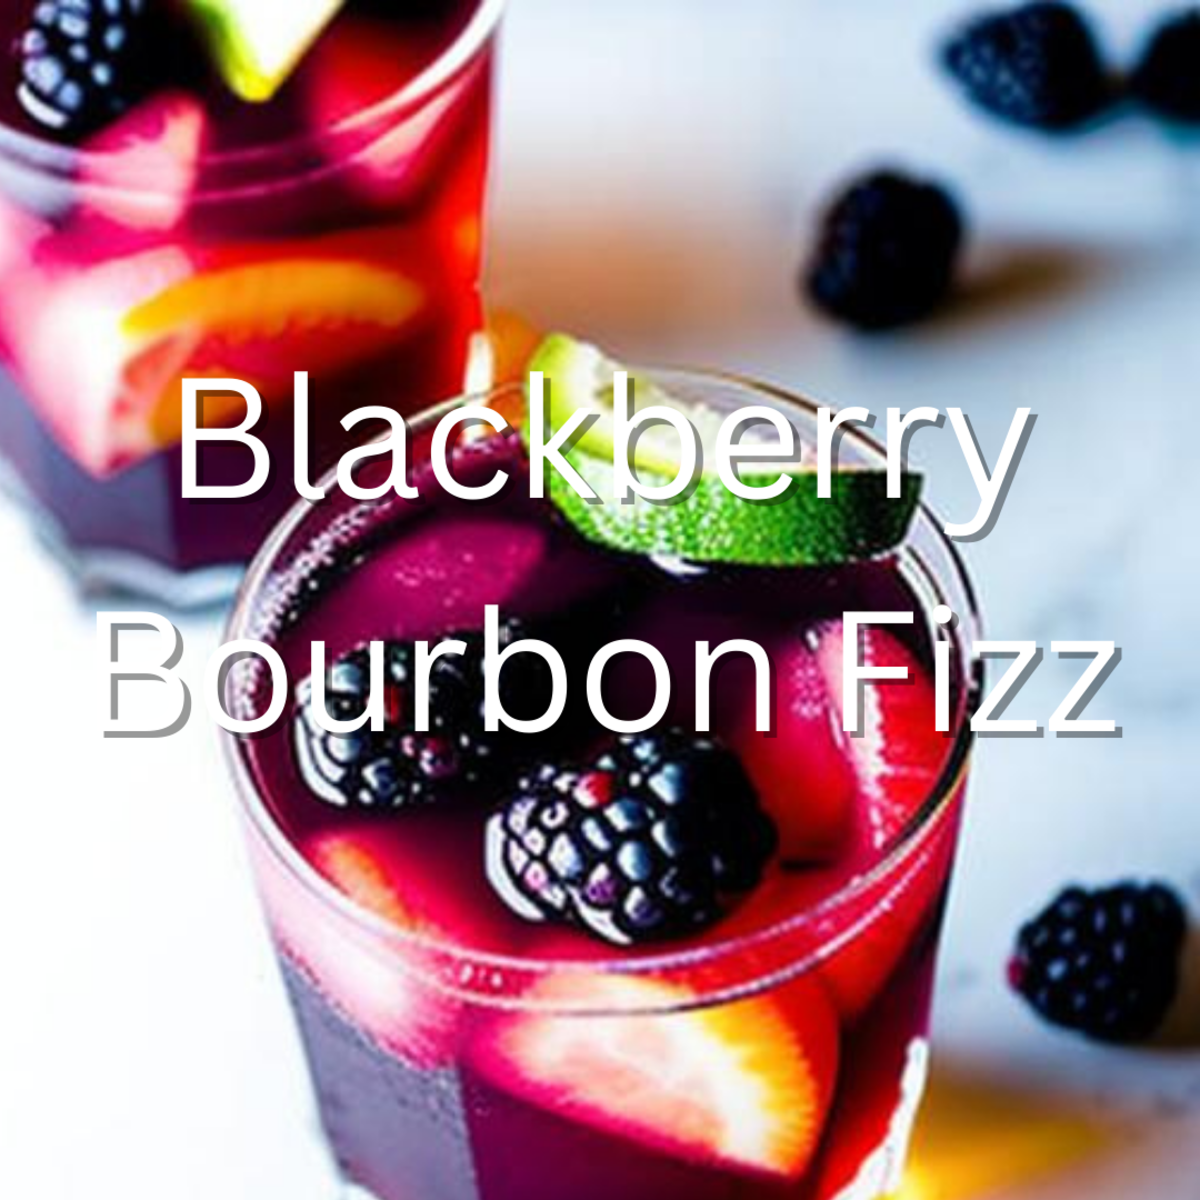 Blackberry Bourbon Fizz